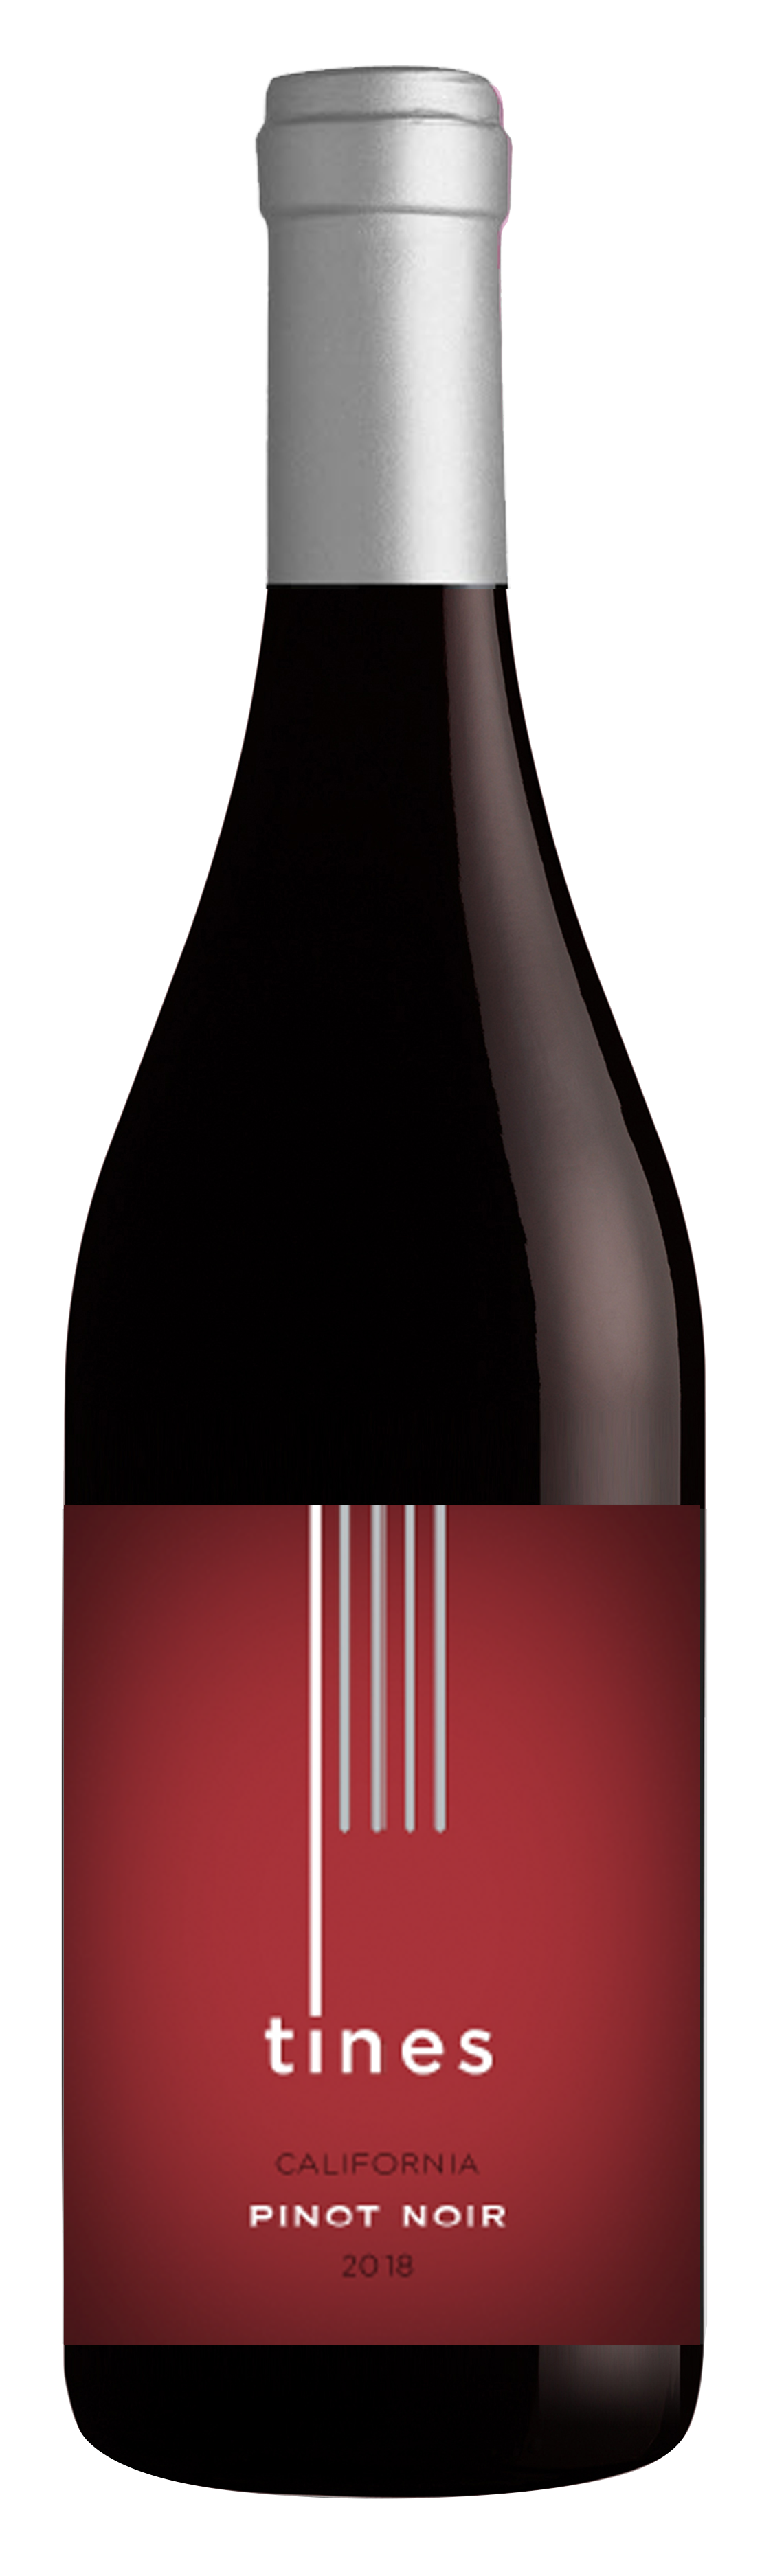 Tines Pinot Noir 2020